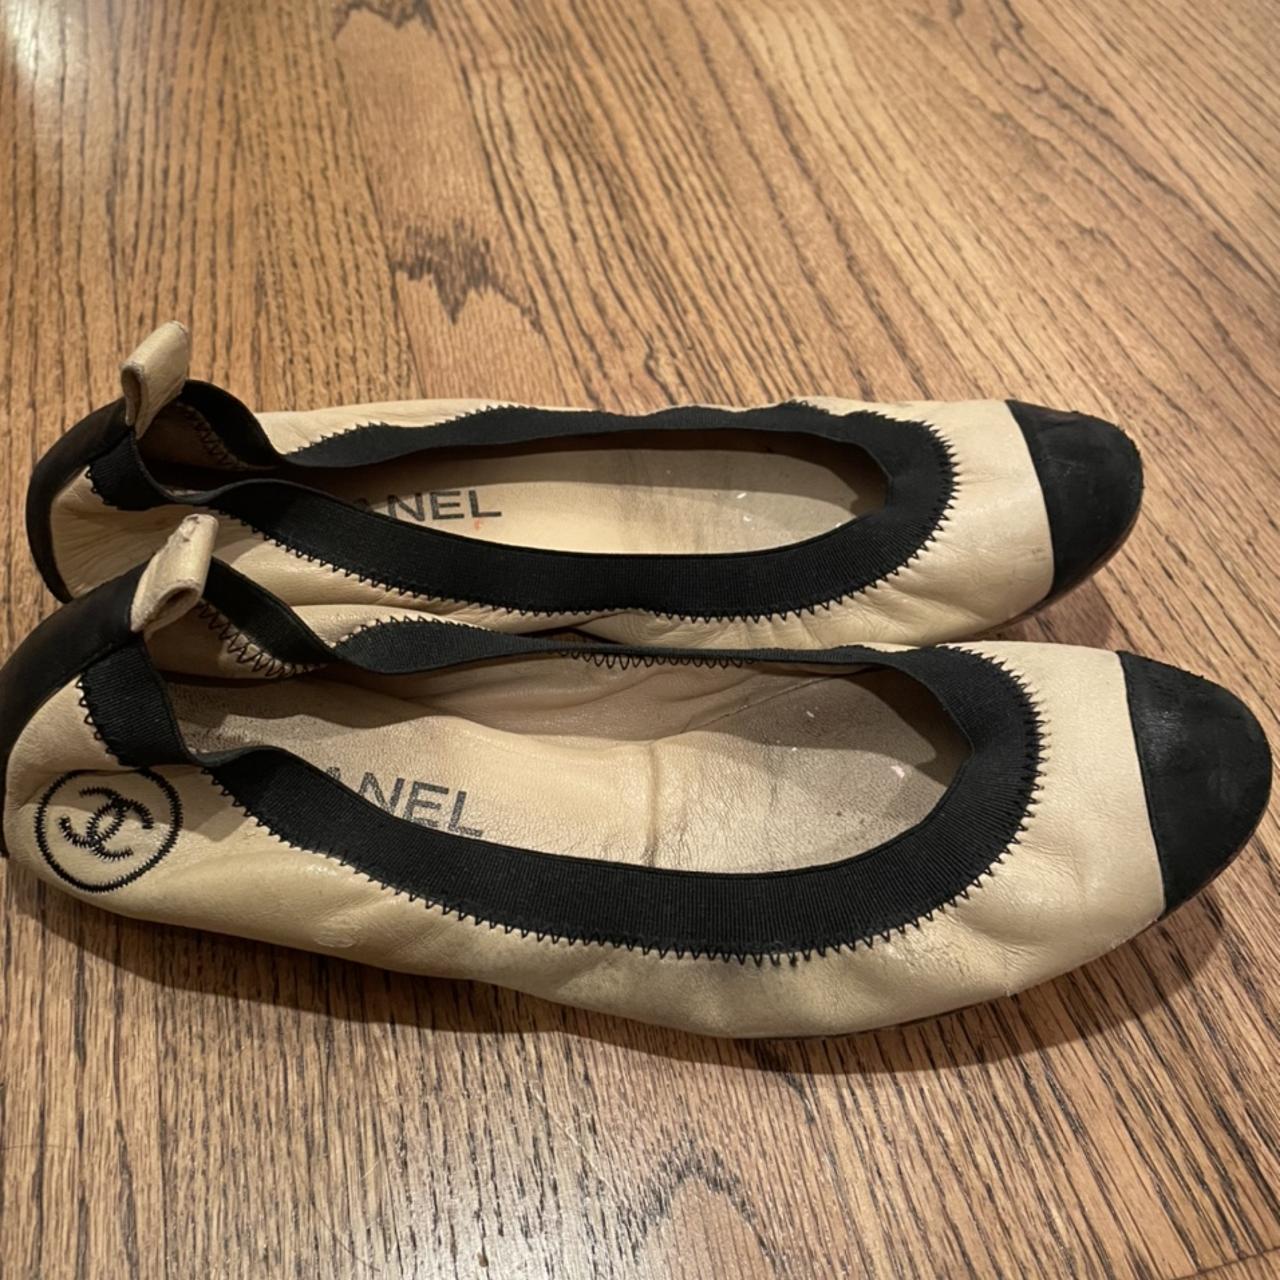 Chanel tan ballet flats with short heel #chanel - Depop